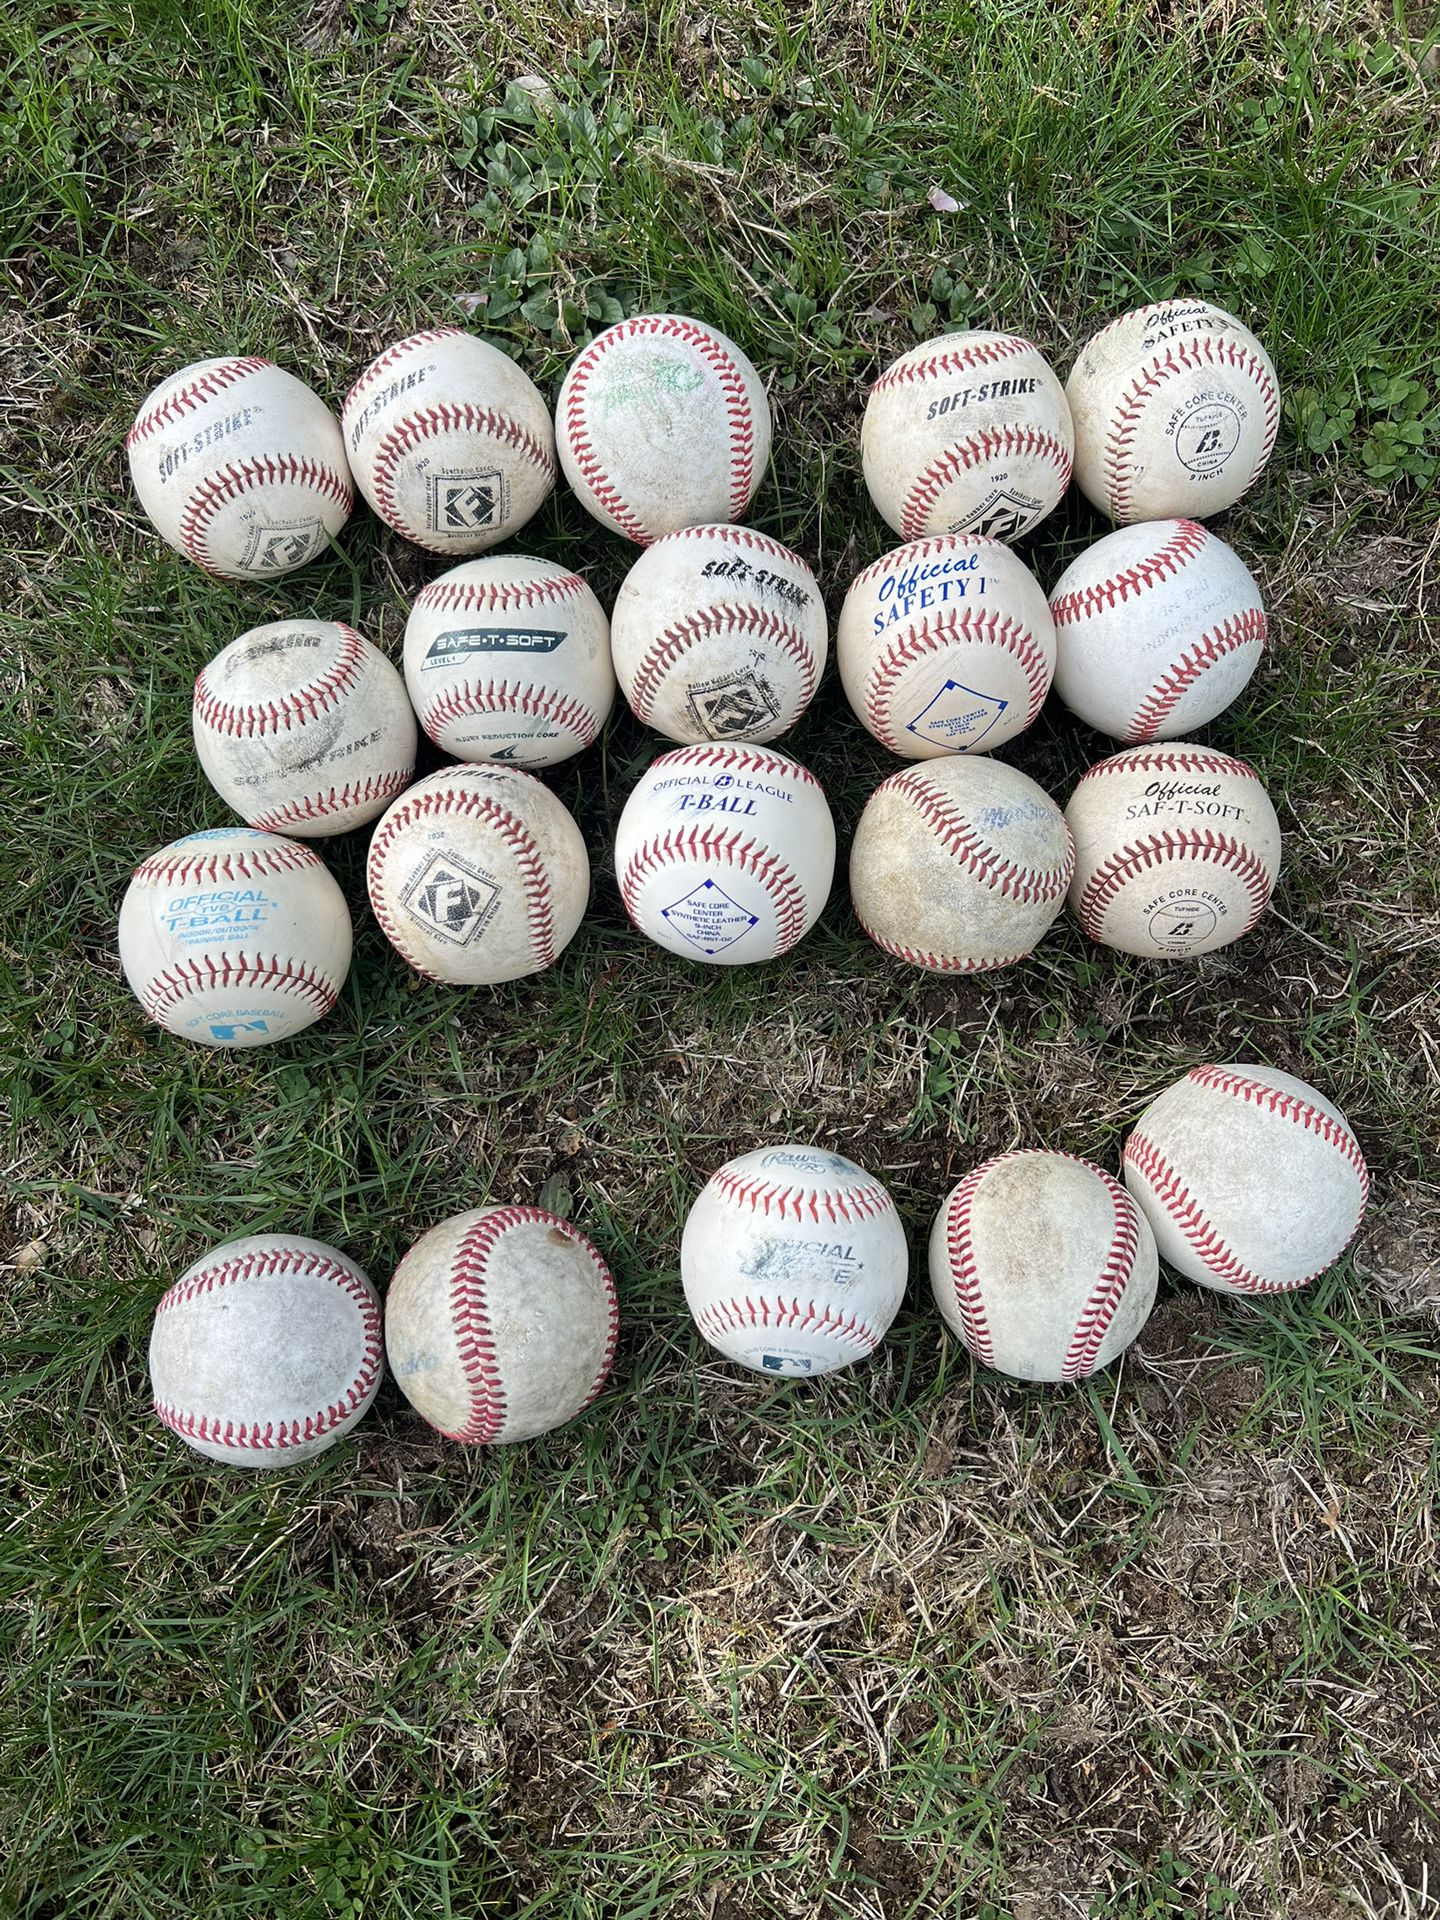 20 Baseballs Total - 15 Are Safety Balls